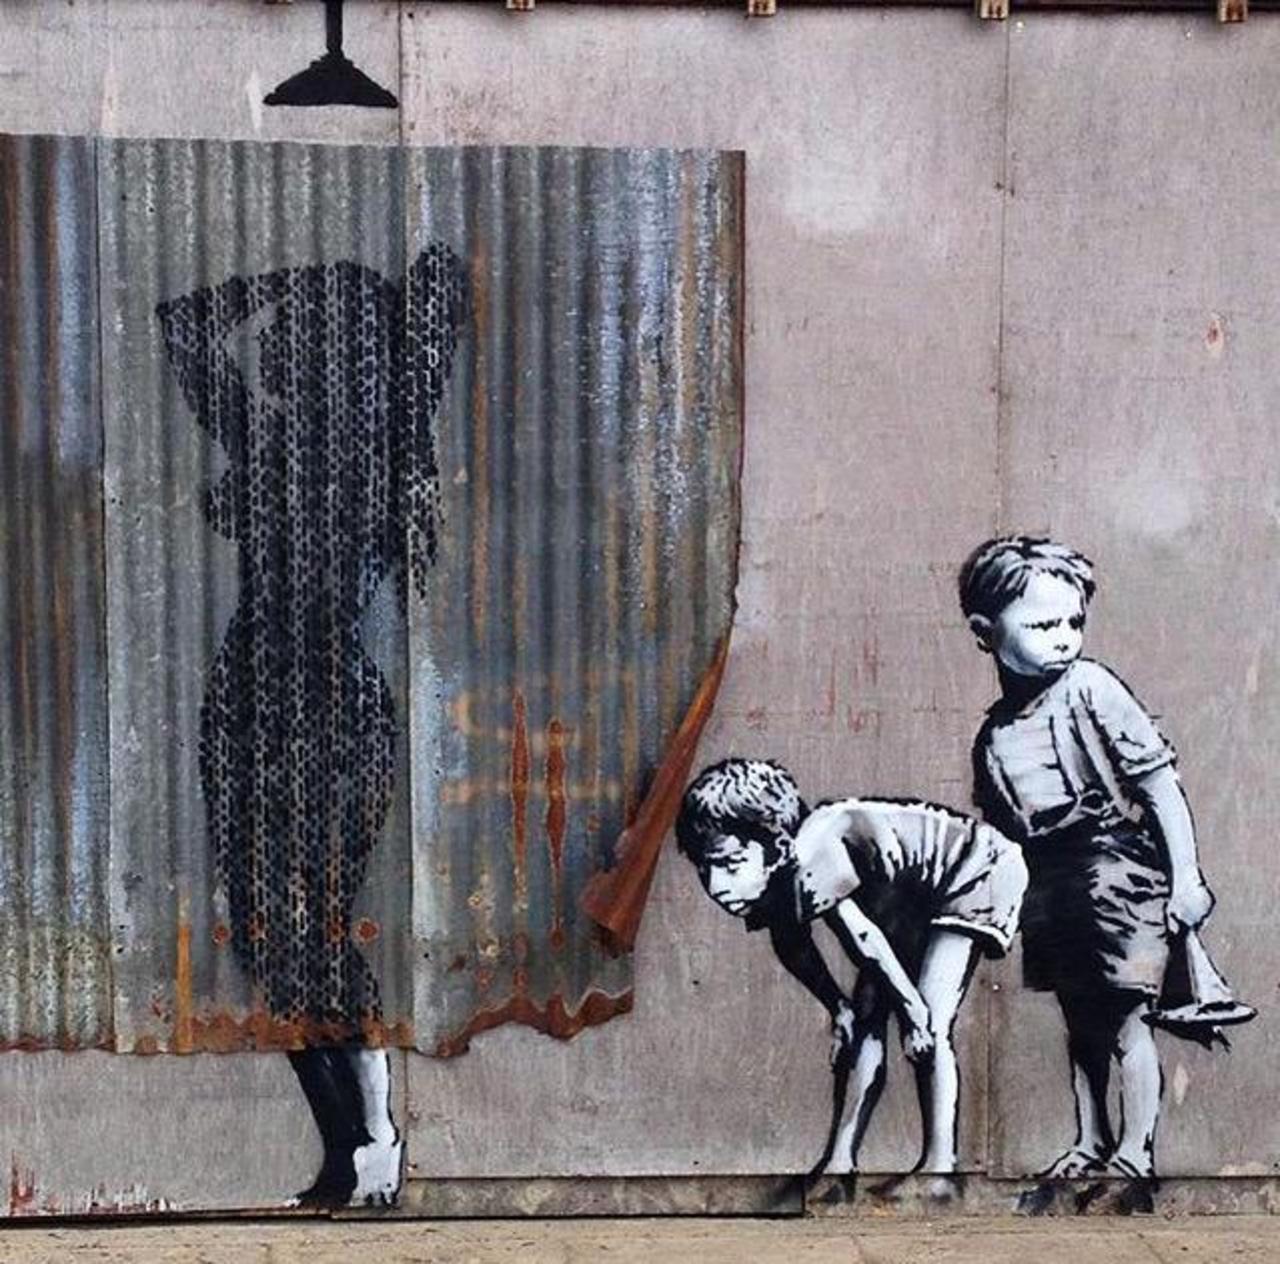 RT @GoogleStreetArt: New #Banksy Street Art in Weston-Super-Mare for #Dismaland 

#streetart #banksy #art #graffiti http://t.co/uEbmoM3q45